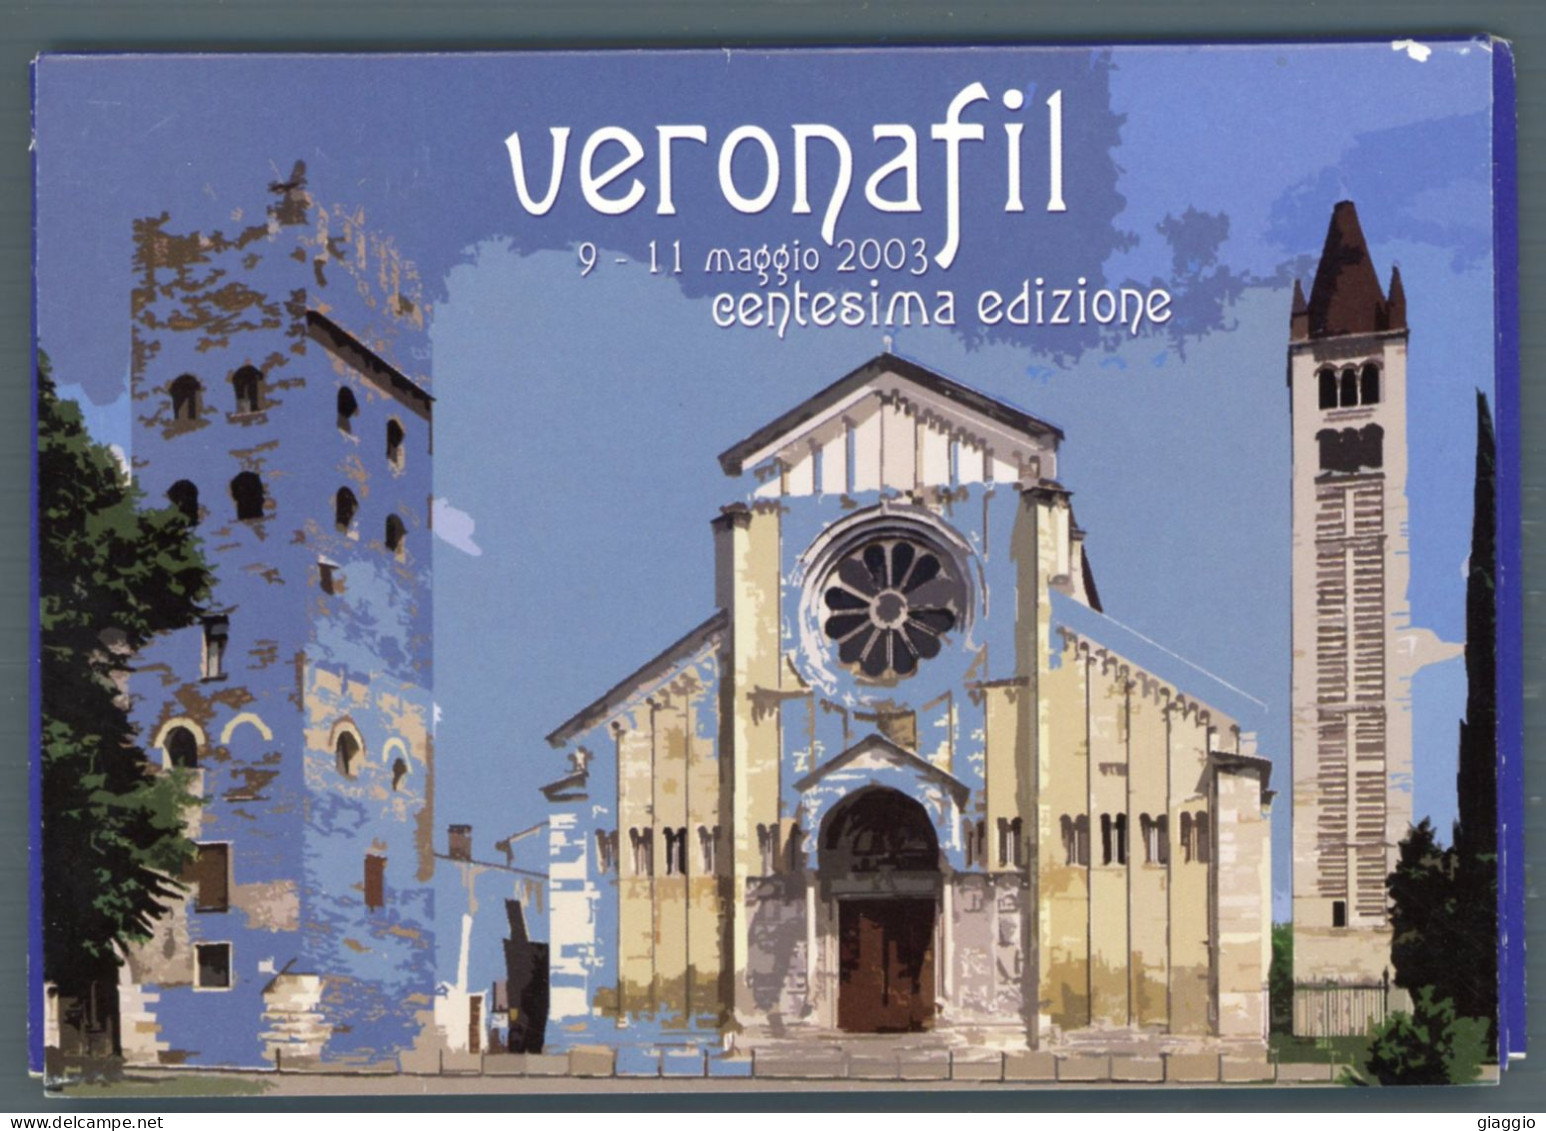 °°° Francobolli - N. 1874 - Vaticano Cartoline Postali Veronafil °°° - Entiers Postaux